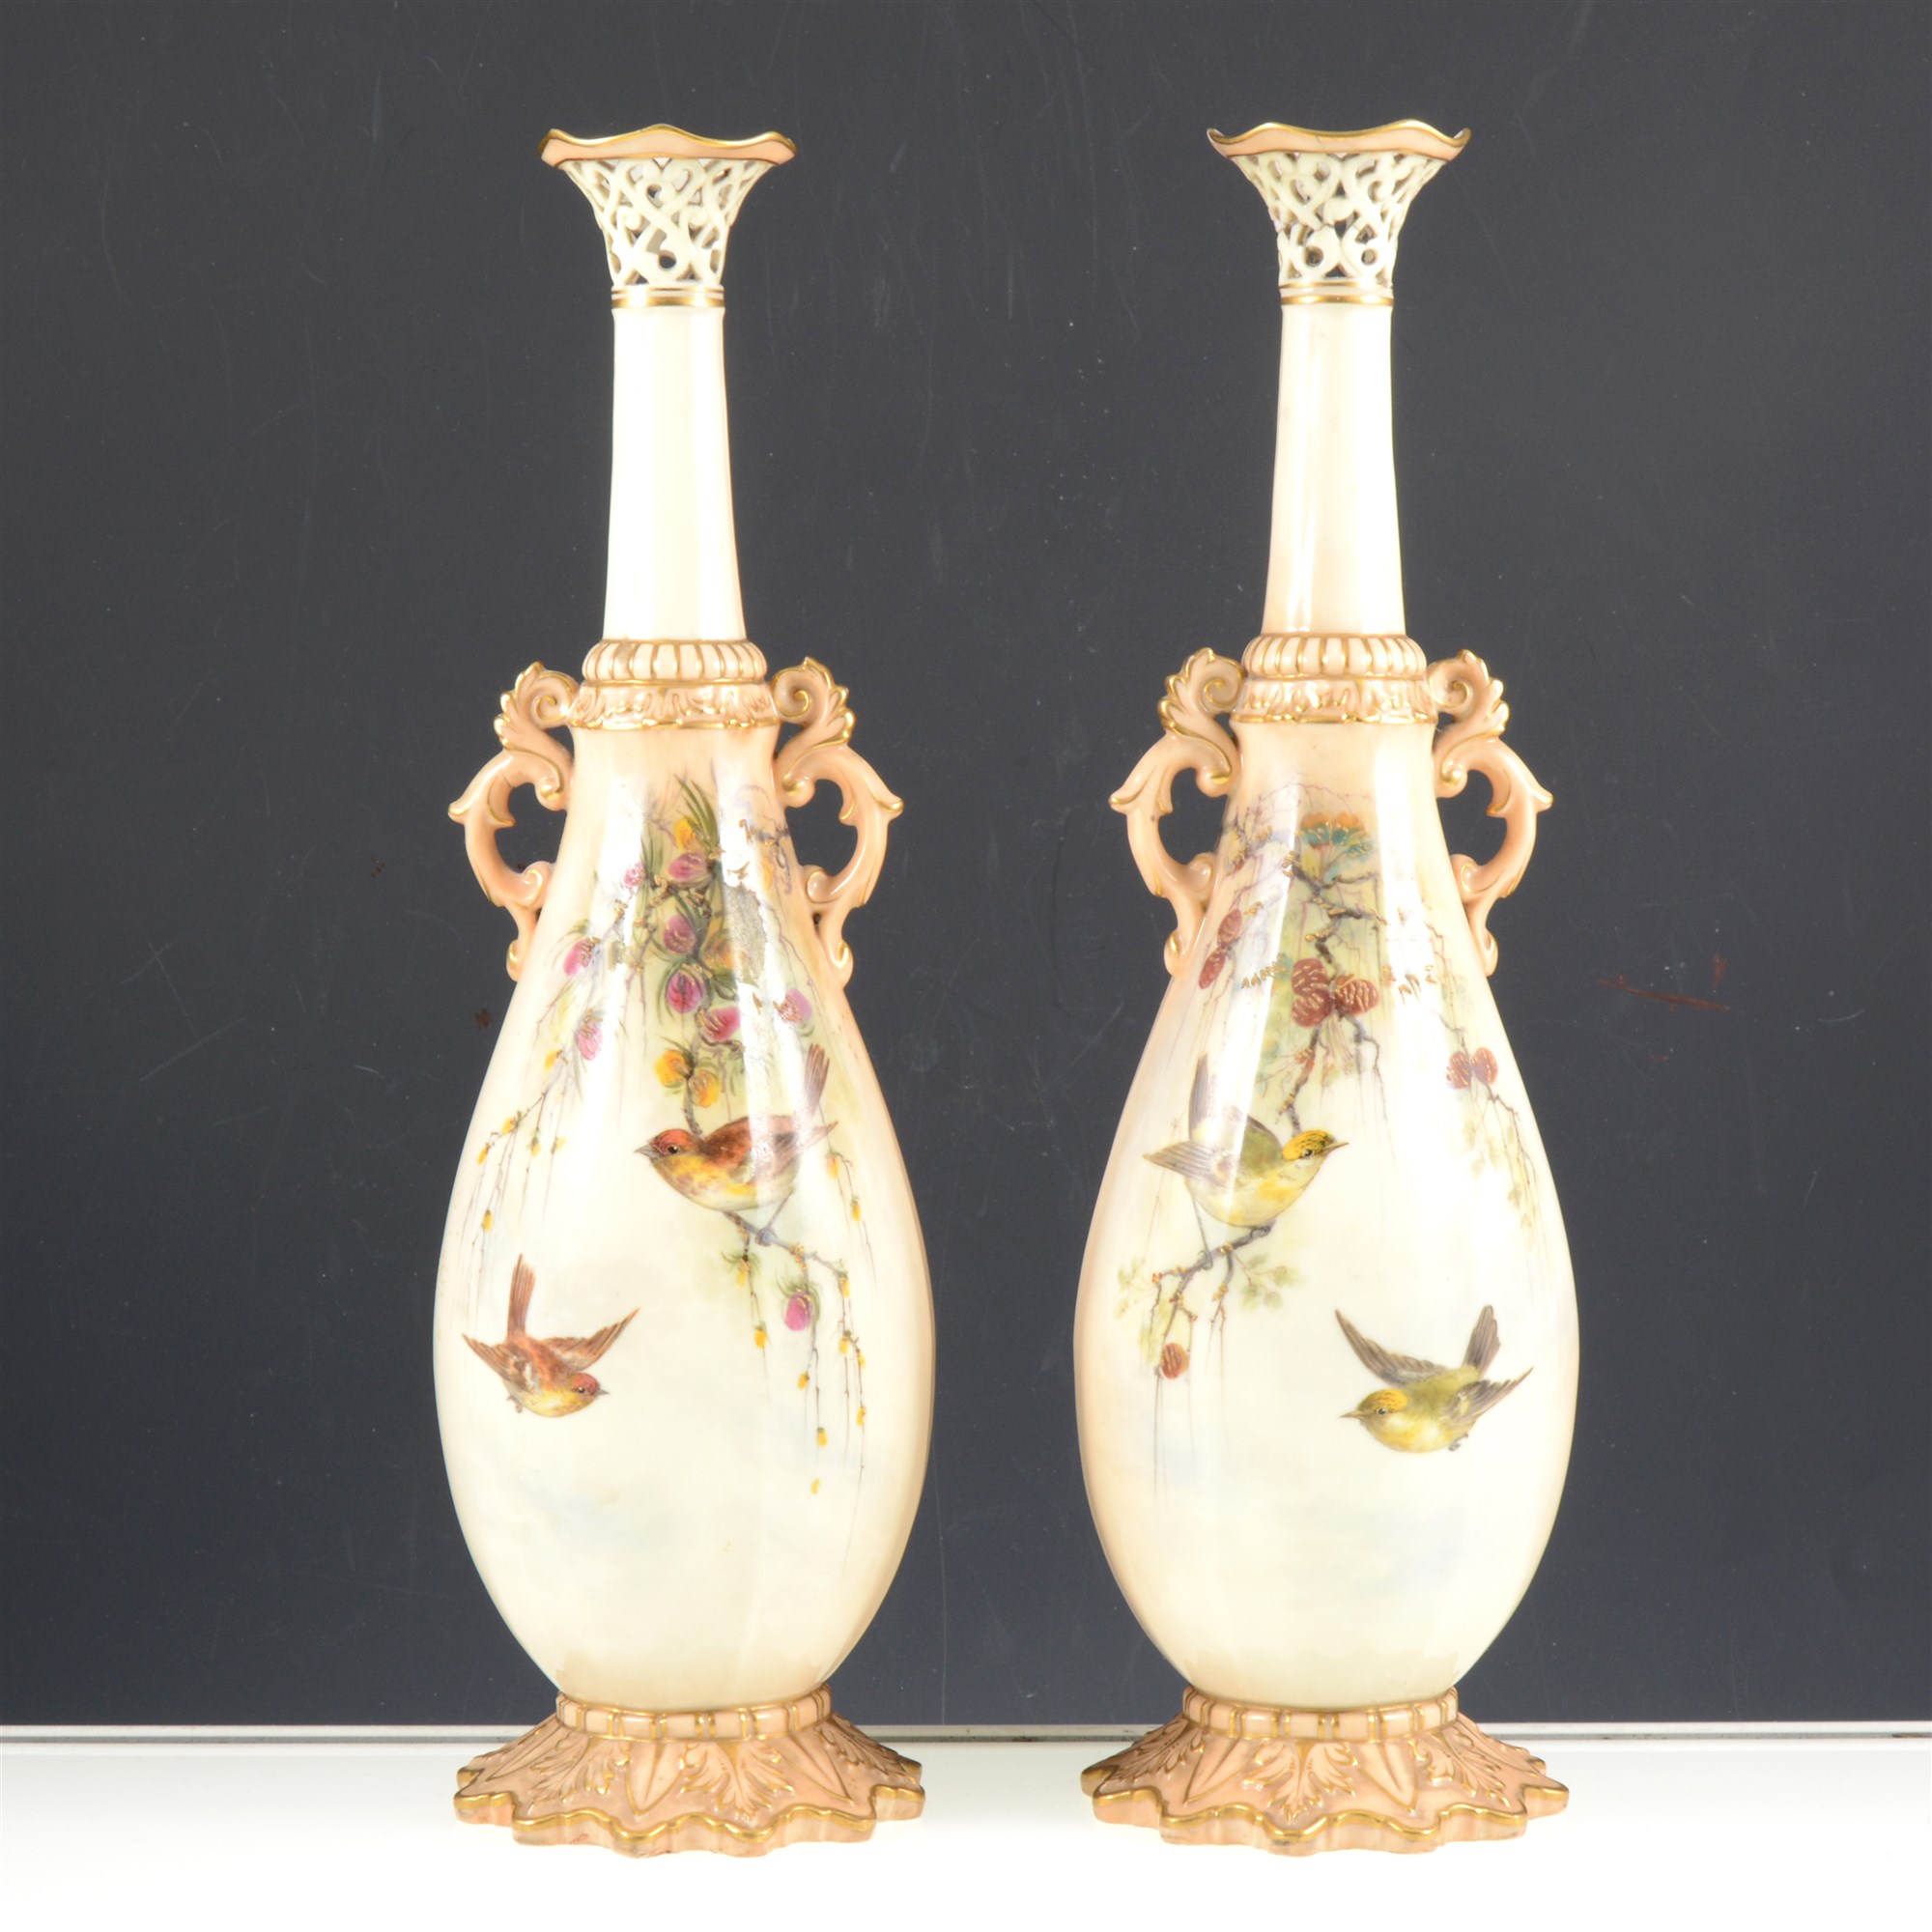 Pair of Locke and Co. Worcester ornamental vases.